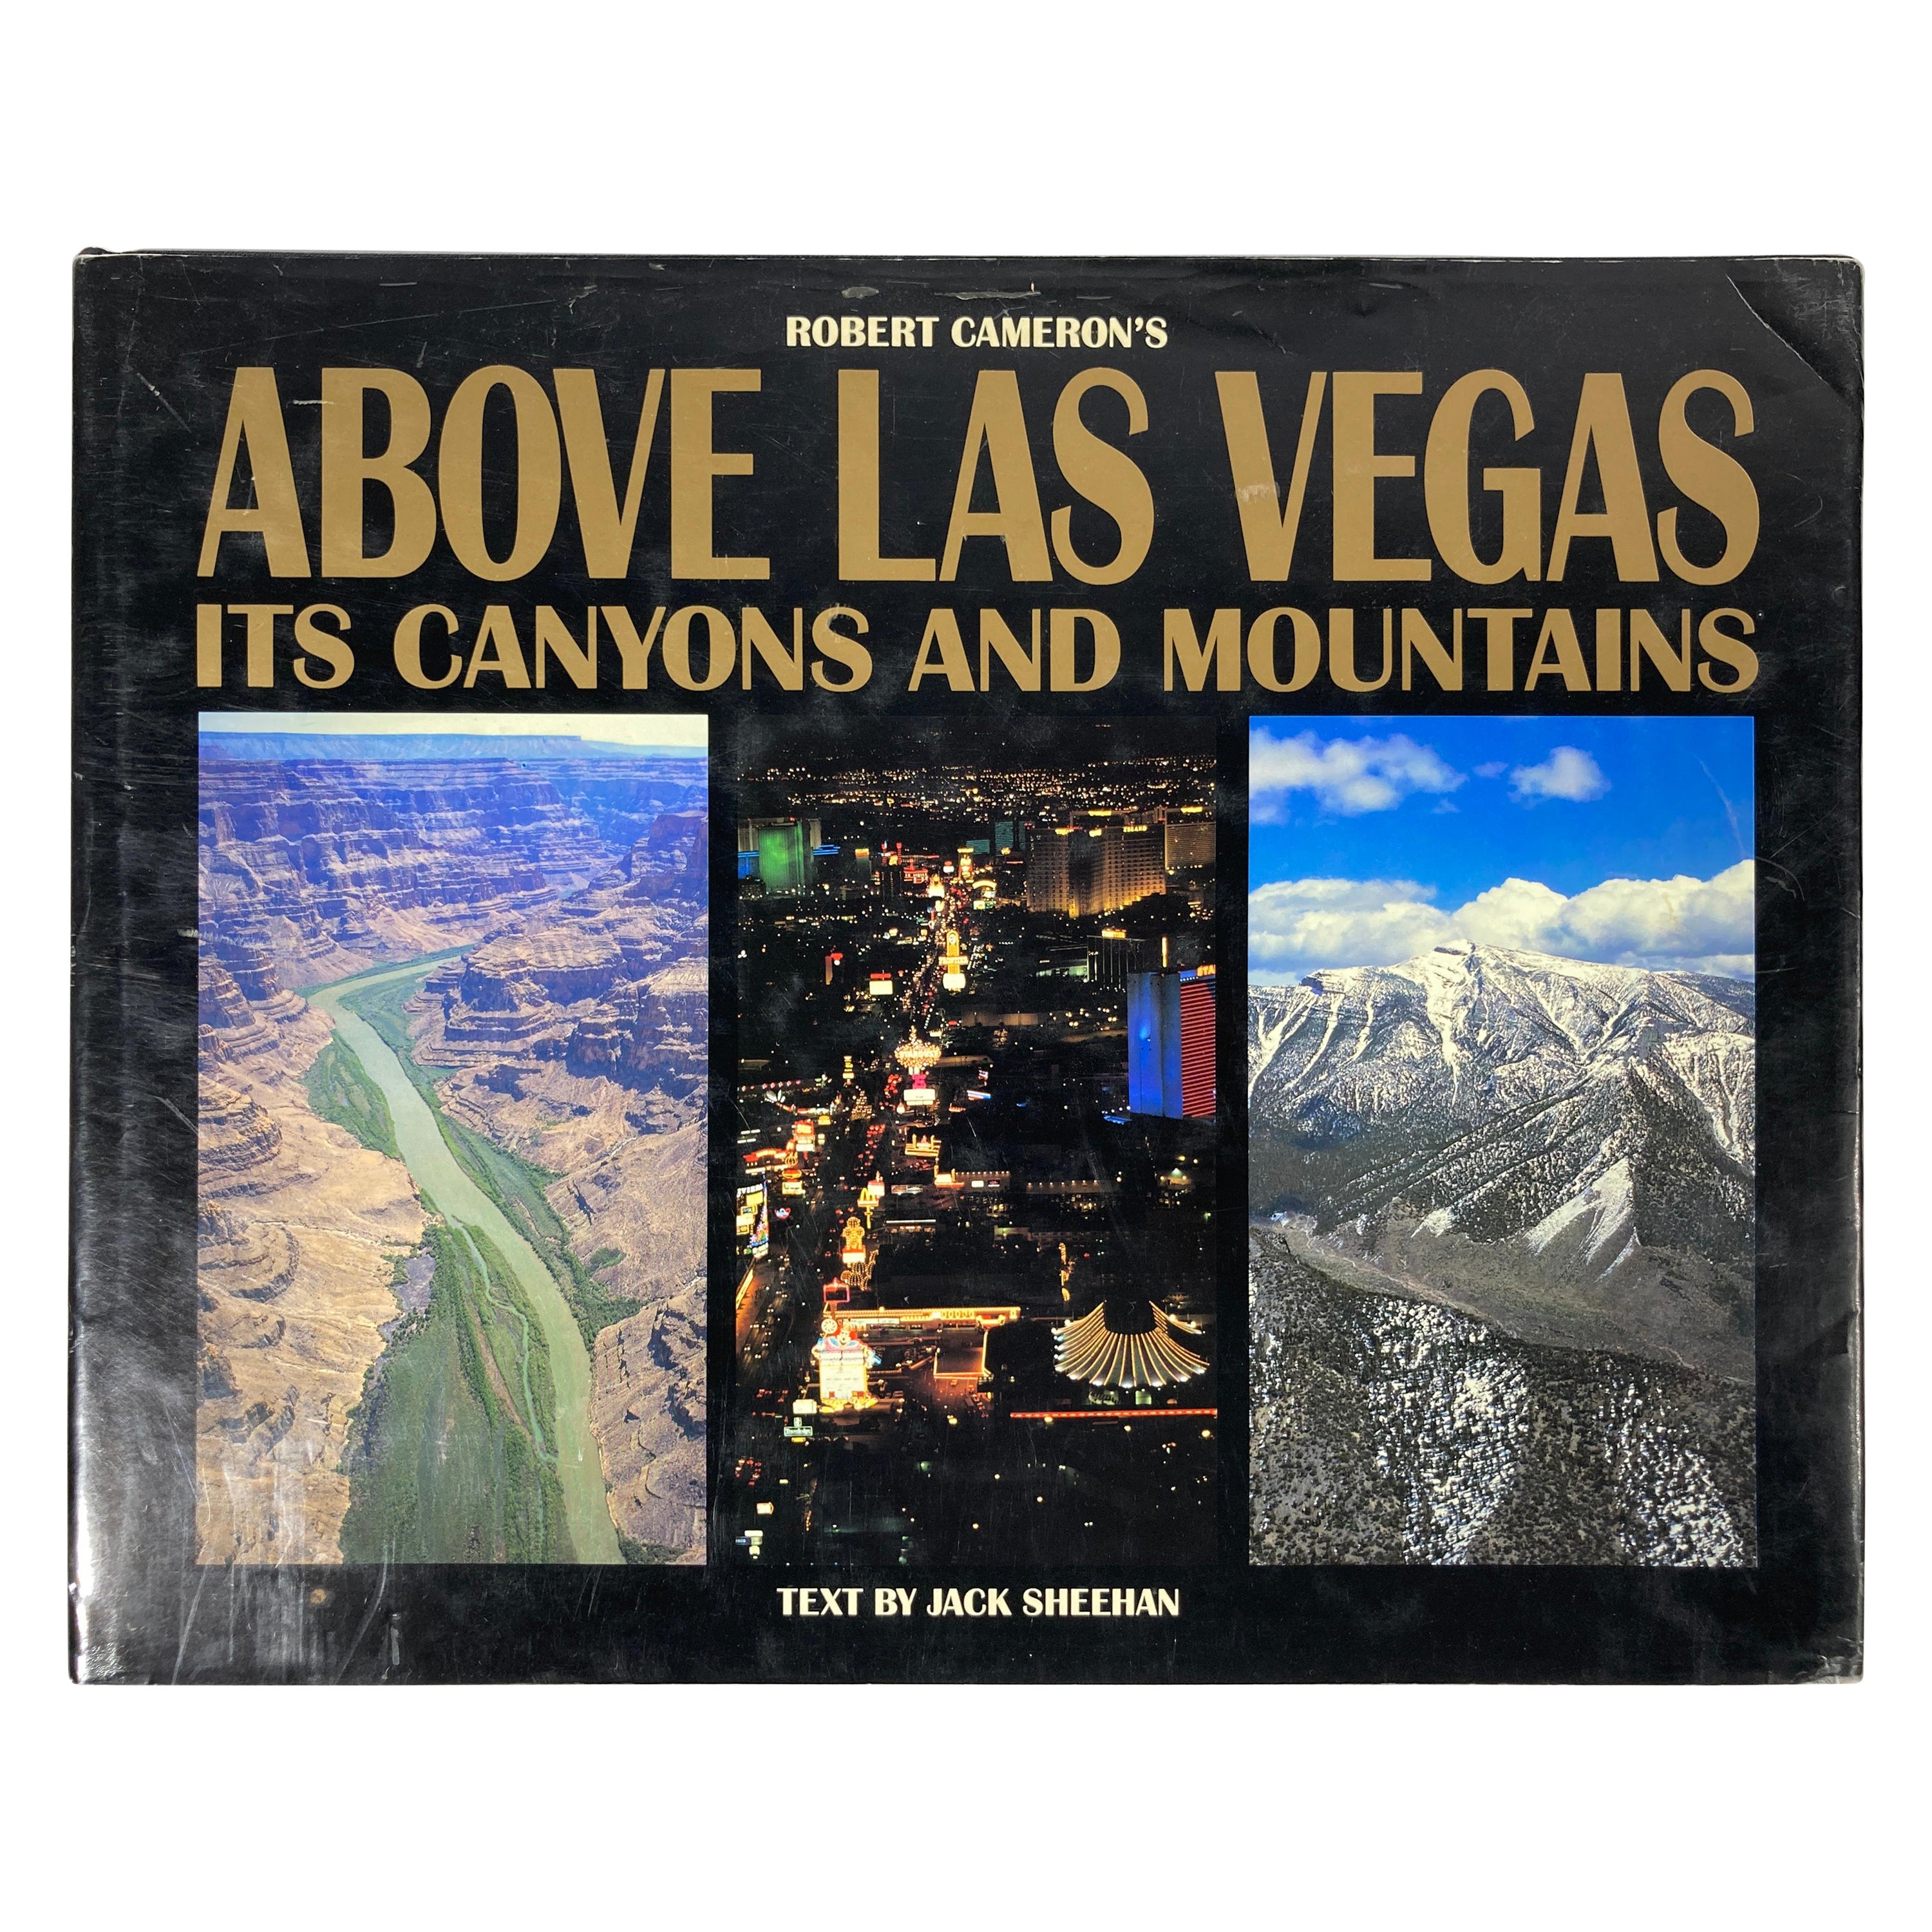 Above Las Vegas by Robert Cameron